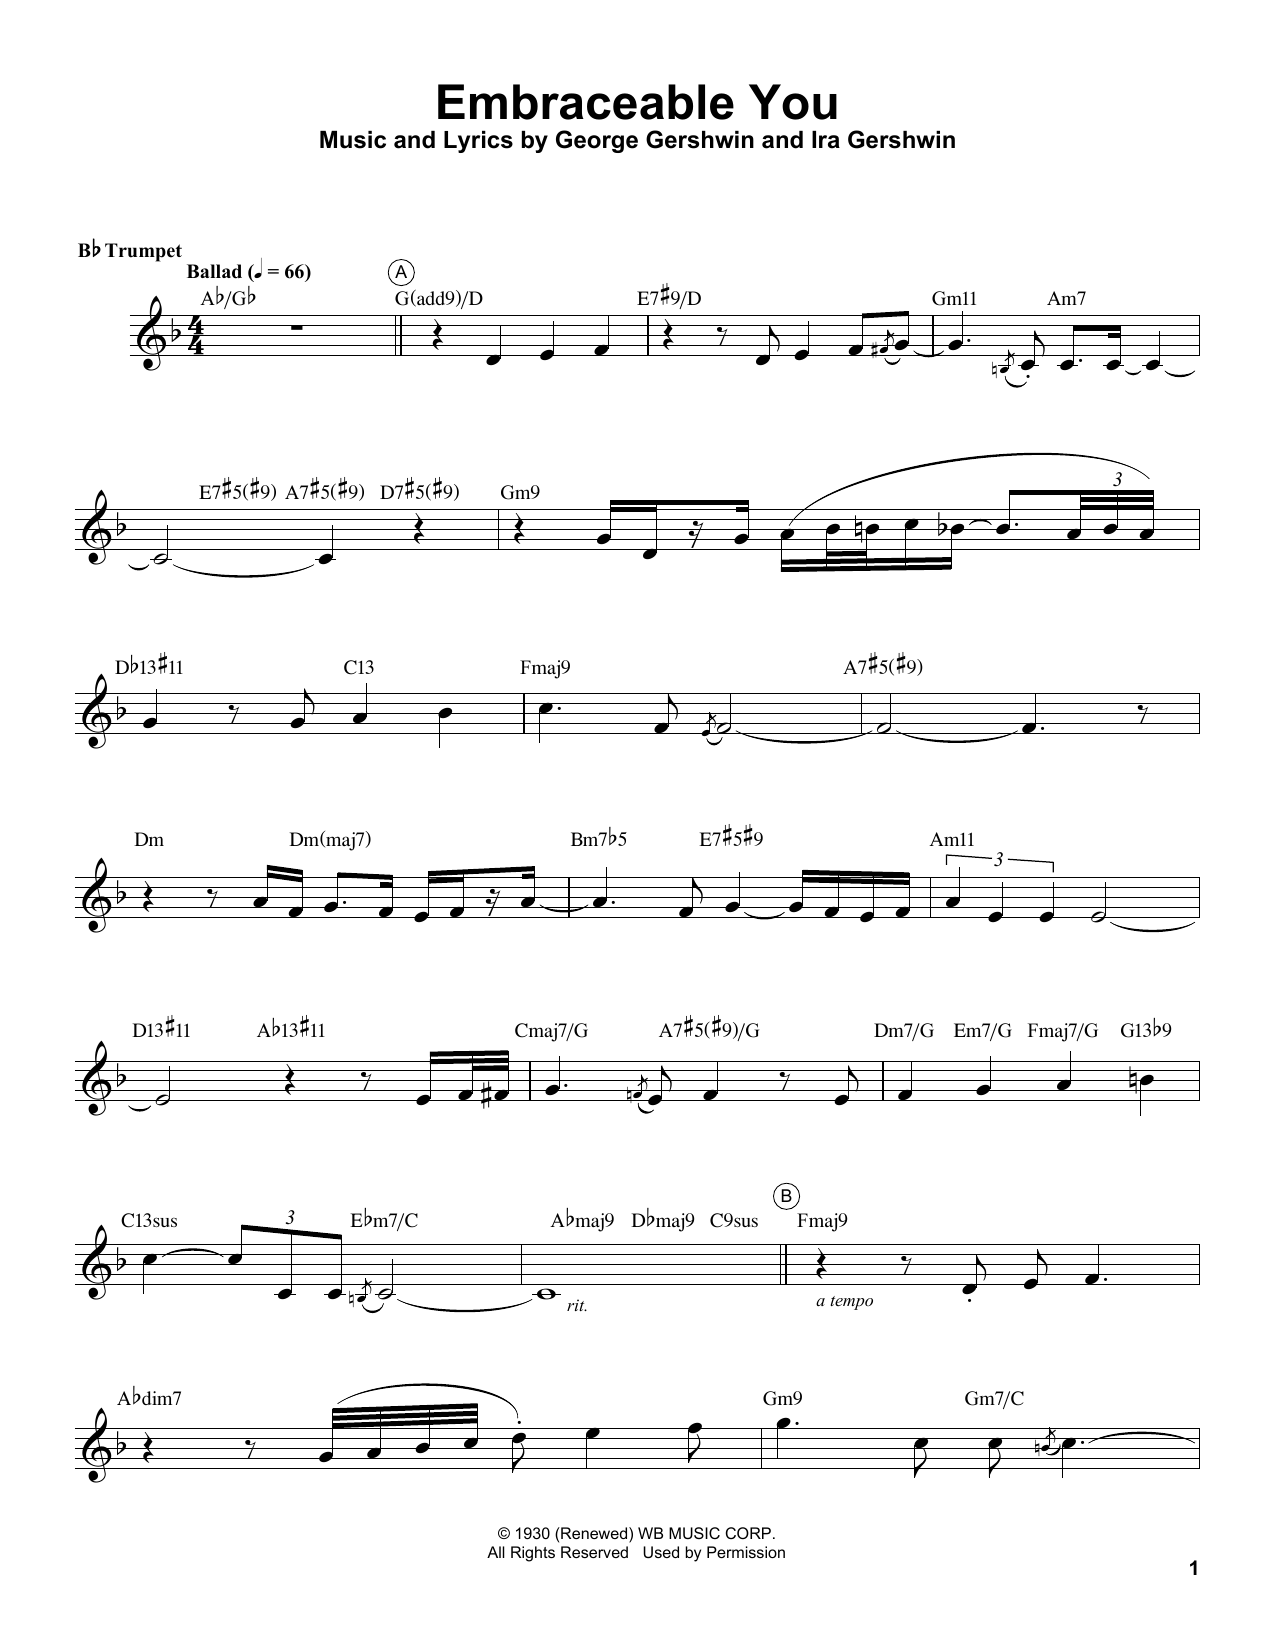 Chris Botti Embraceable You Sheet Music Notes & Chords for Trumpet Transcription - Download or Print PDF